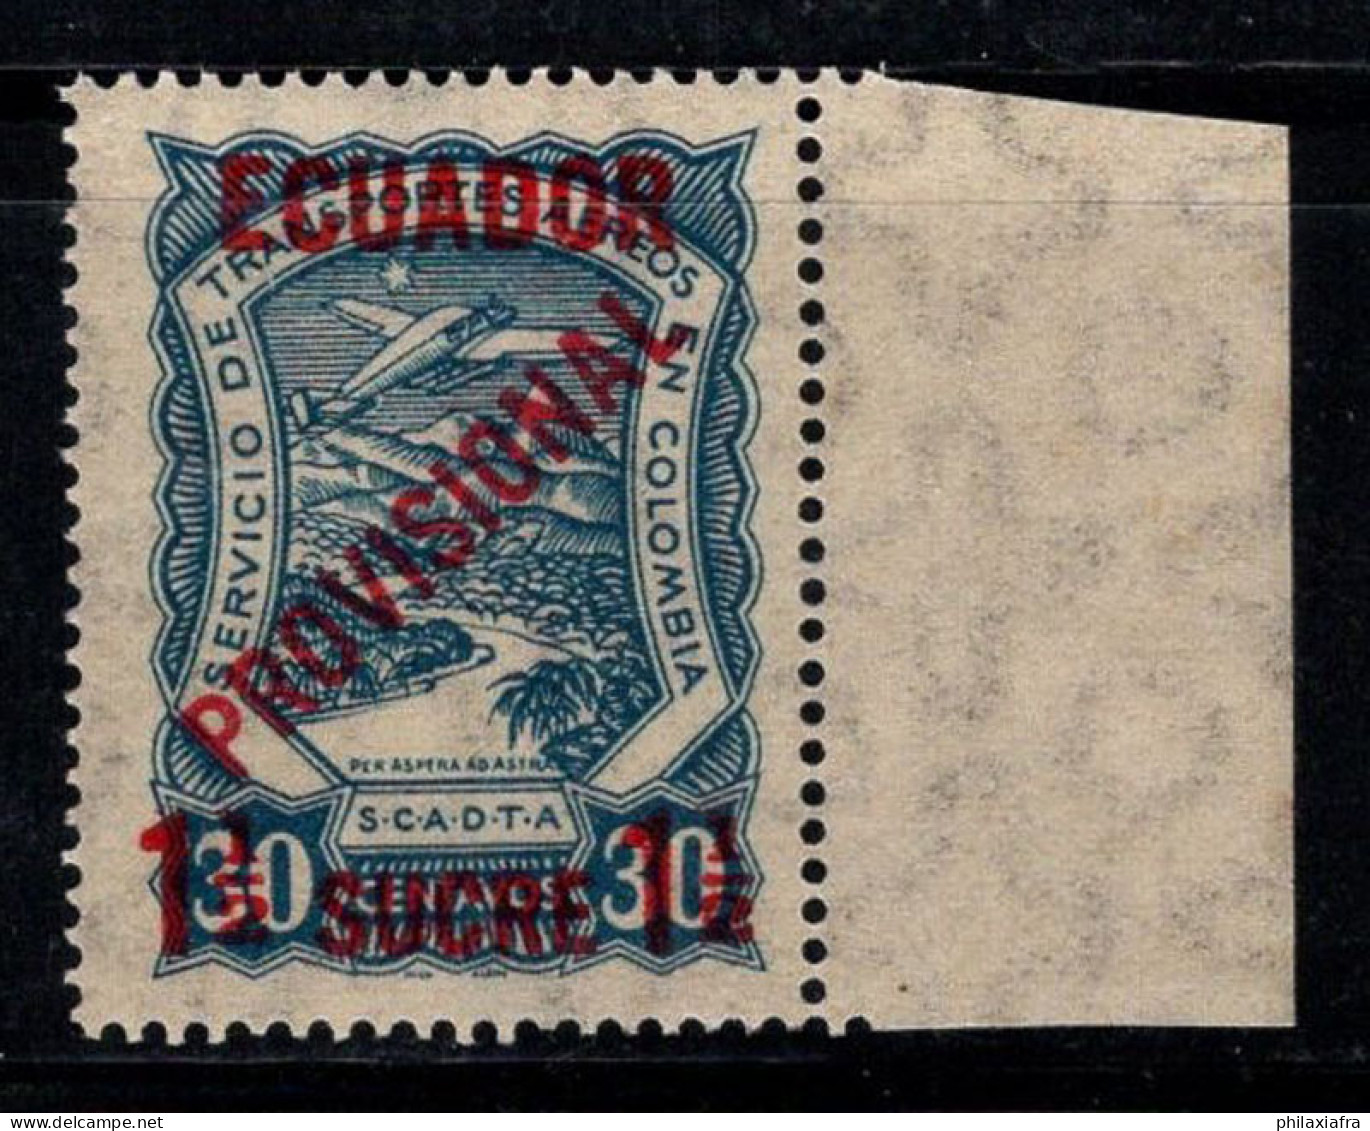 Équateur, Scadta 1928 Mi. 4 I Neuf ** 100% Poste Aérienne 1 1/2 S, PROVISOIRE - Ecuador